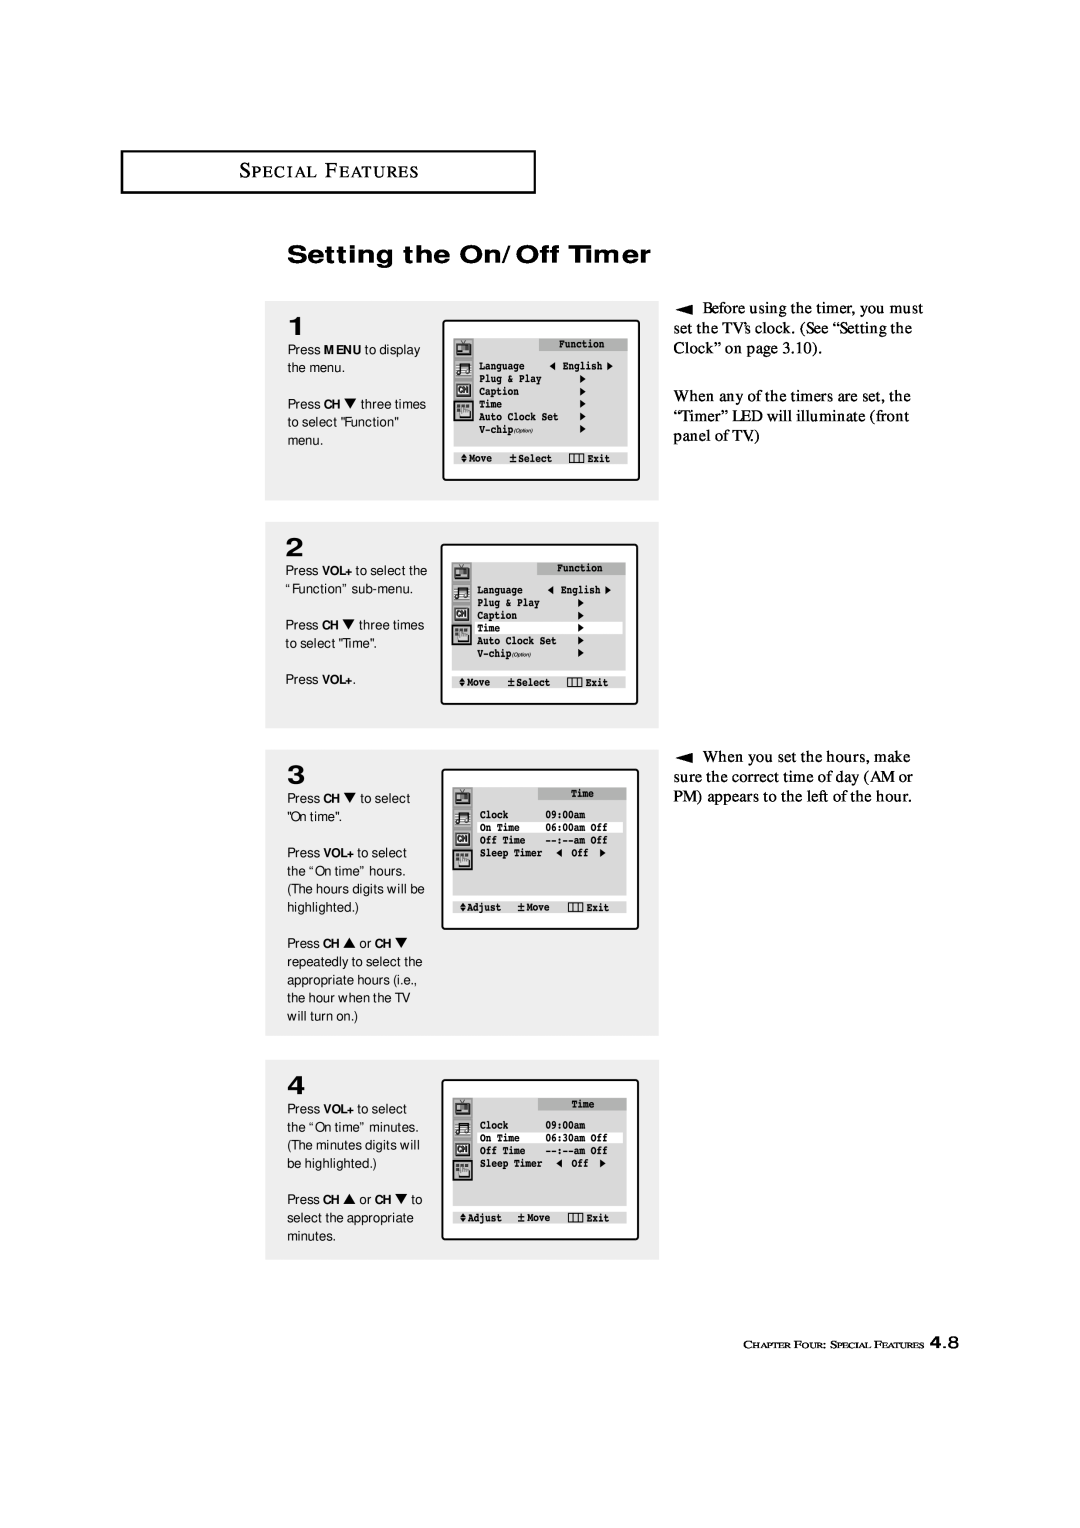 Samsung TXK 3276, TXL 3276, TXL 3676, TXK 3676 manual Setting the On/Off Timer, Press VOL+ to select the “Function” sub-menu 